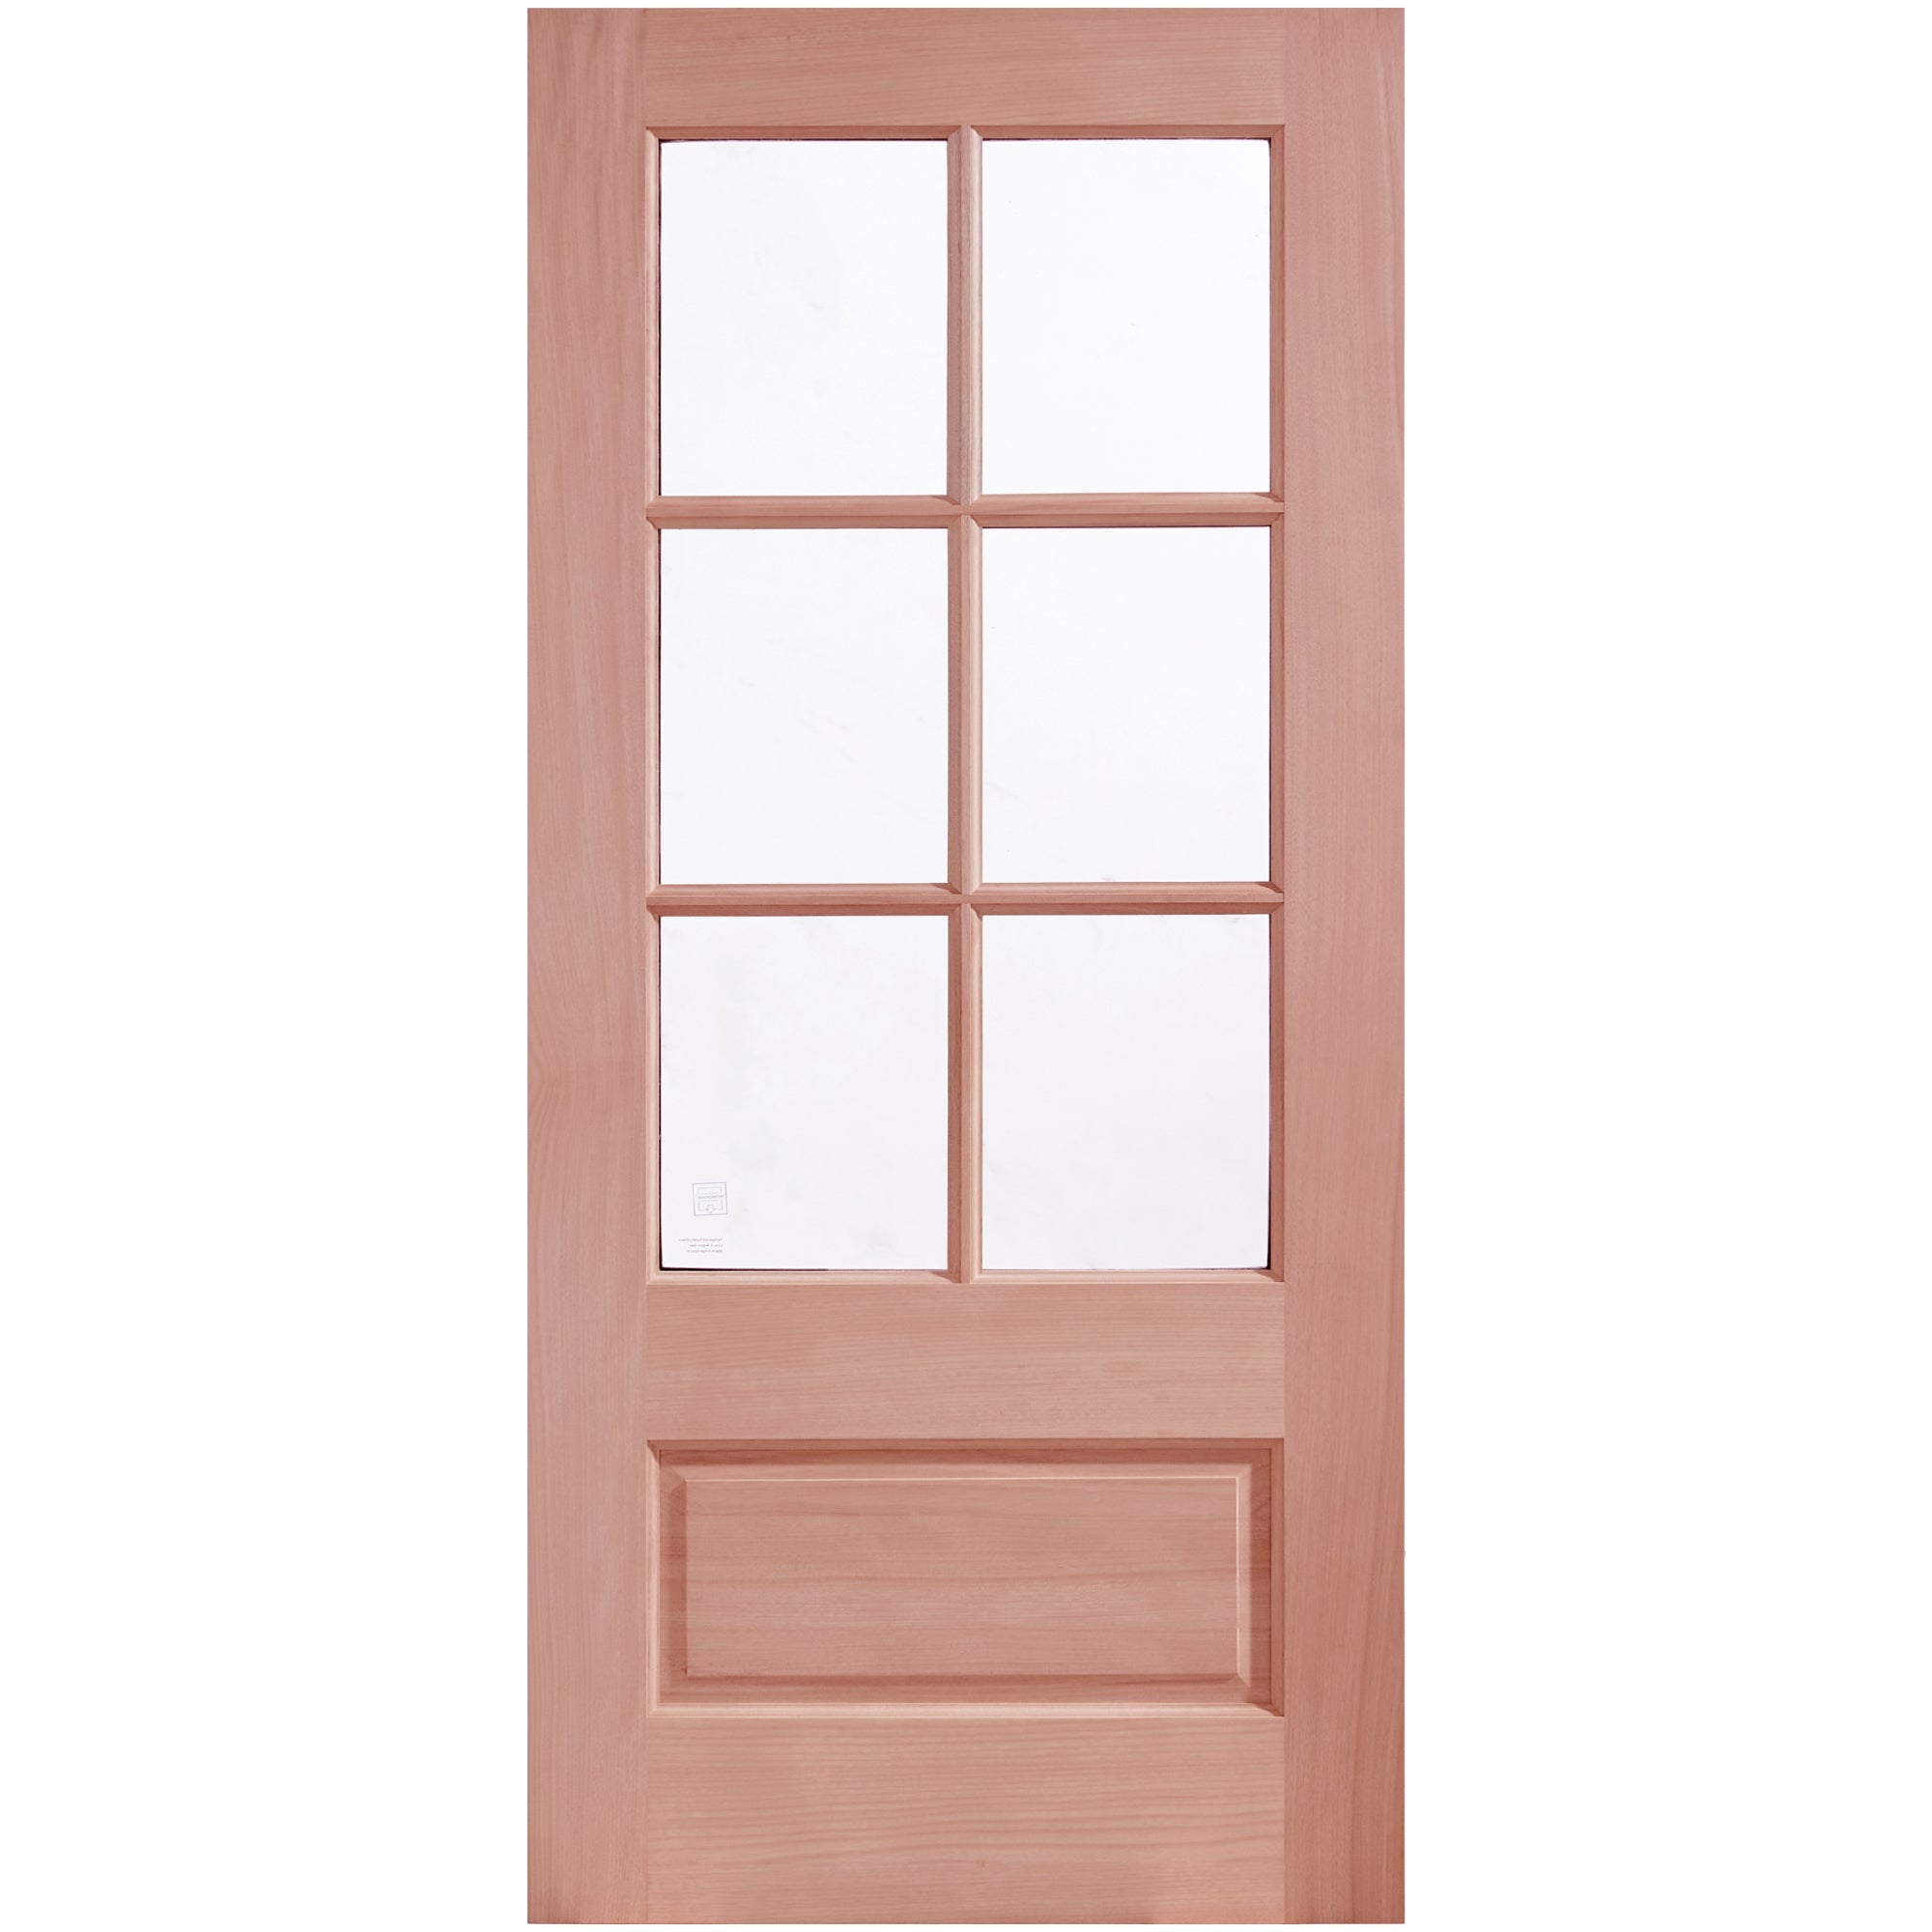 Unfinished Mahogany Exterior Door With 6 Lite